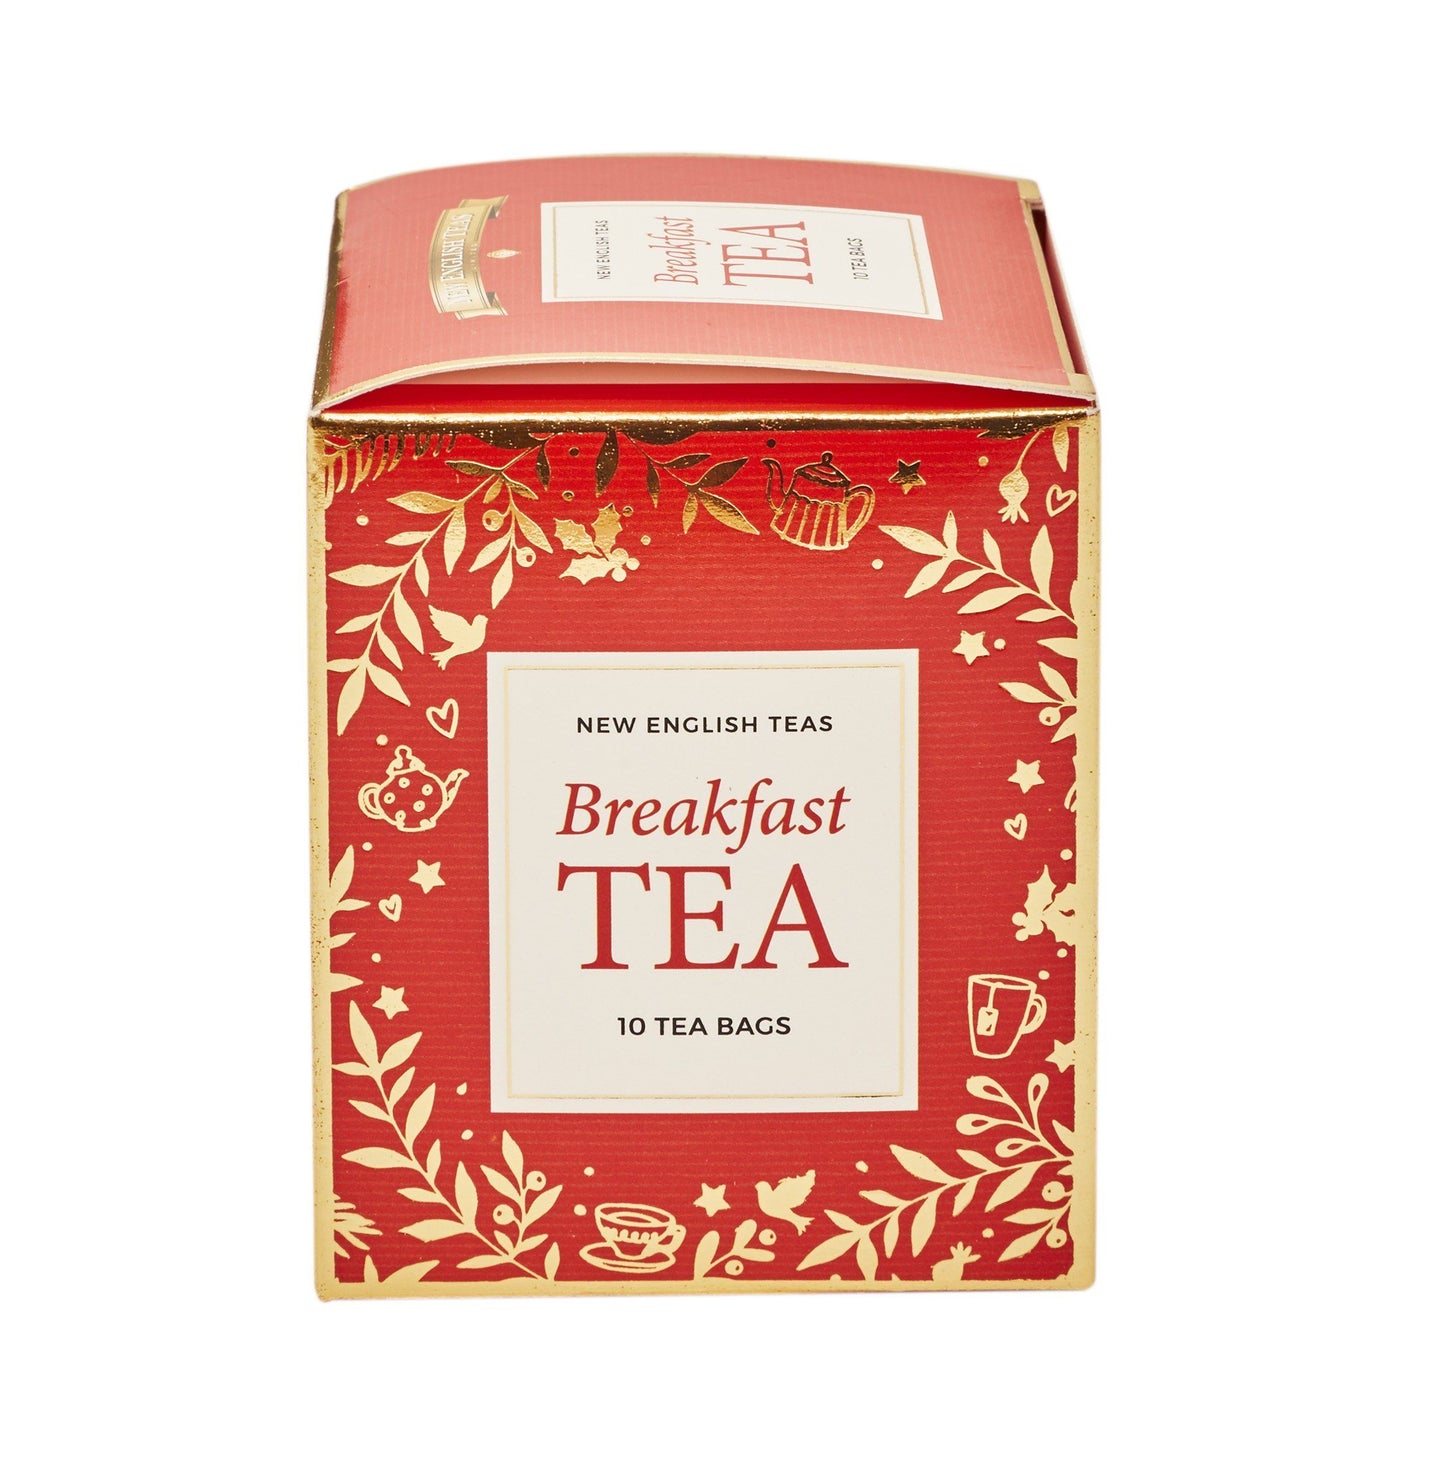 Red Christmas Teabag Box with 10 Breakfast Tea Teabags Black Tea New English Teas 